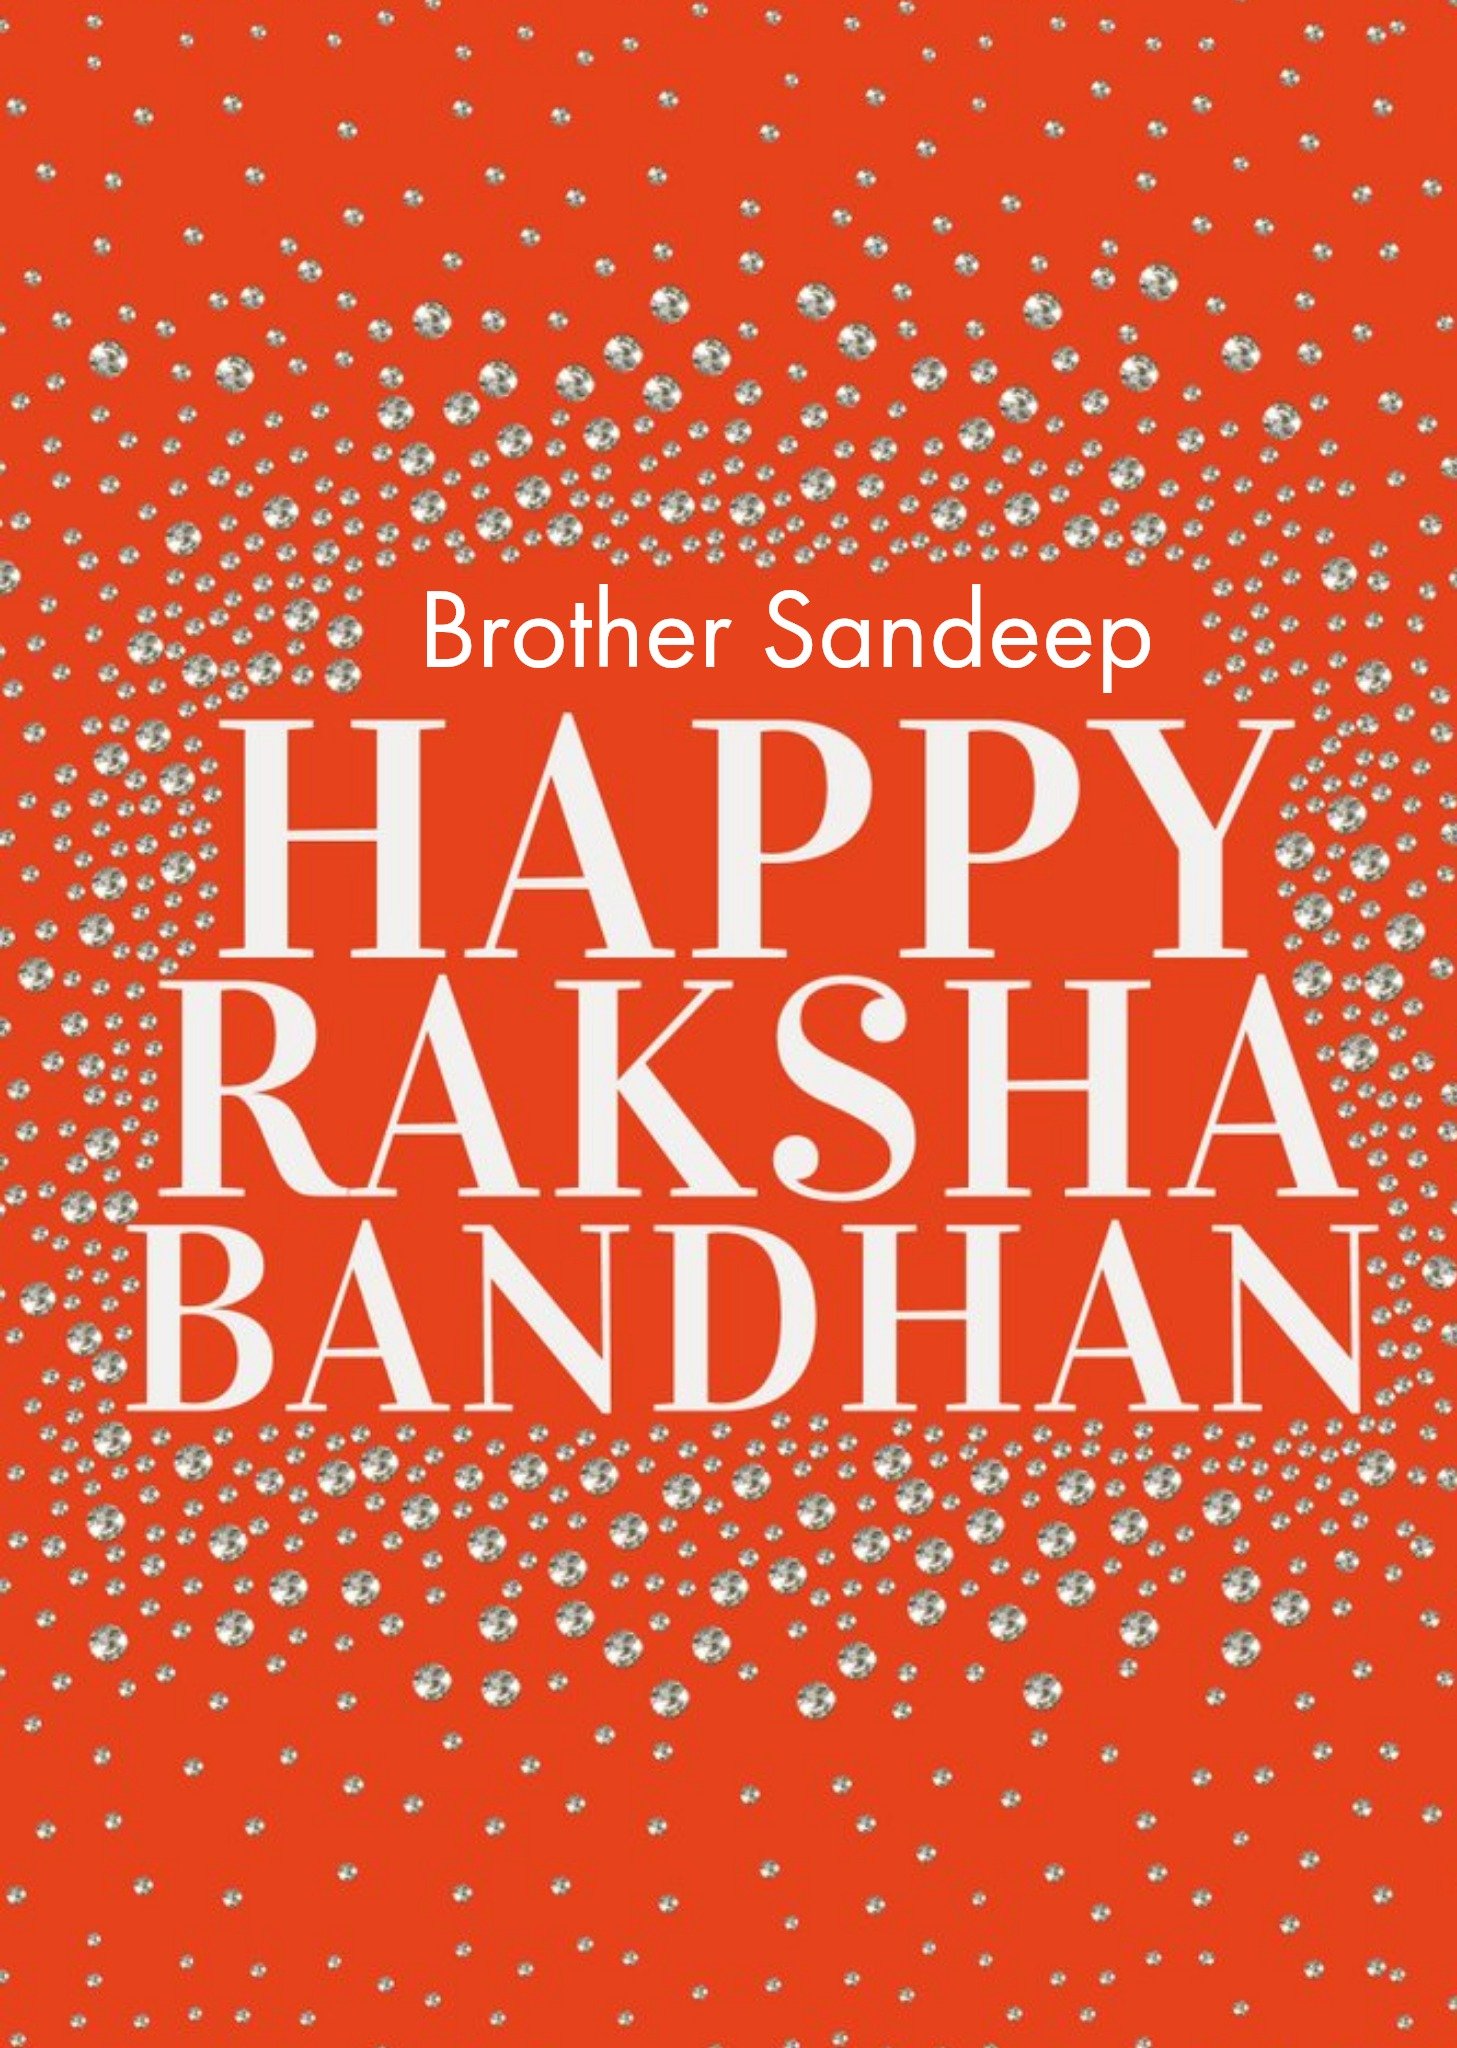 Eastern Print Studio Abstract Illustration Happy Raksha Bandhan Brother Card Ecard